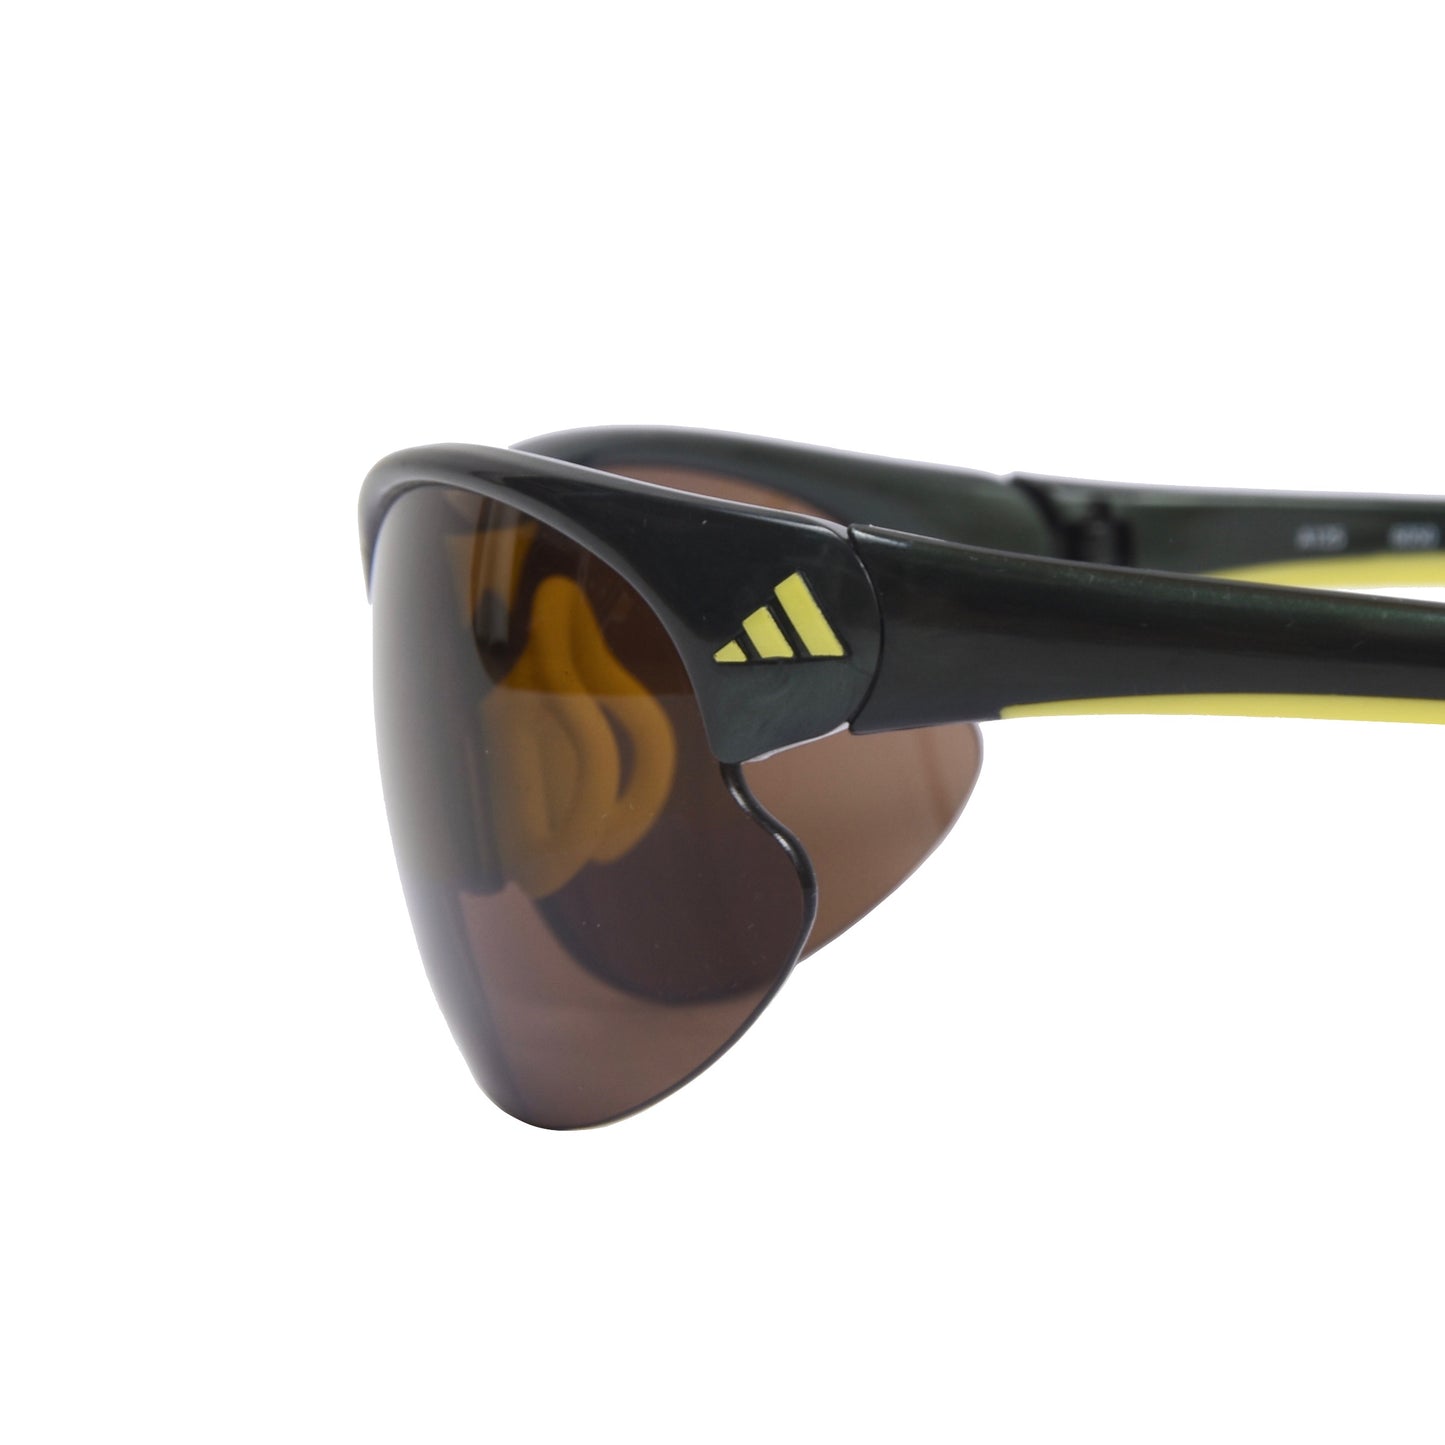 Adidas A125 6050 Cycling Sunglasses - Green